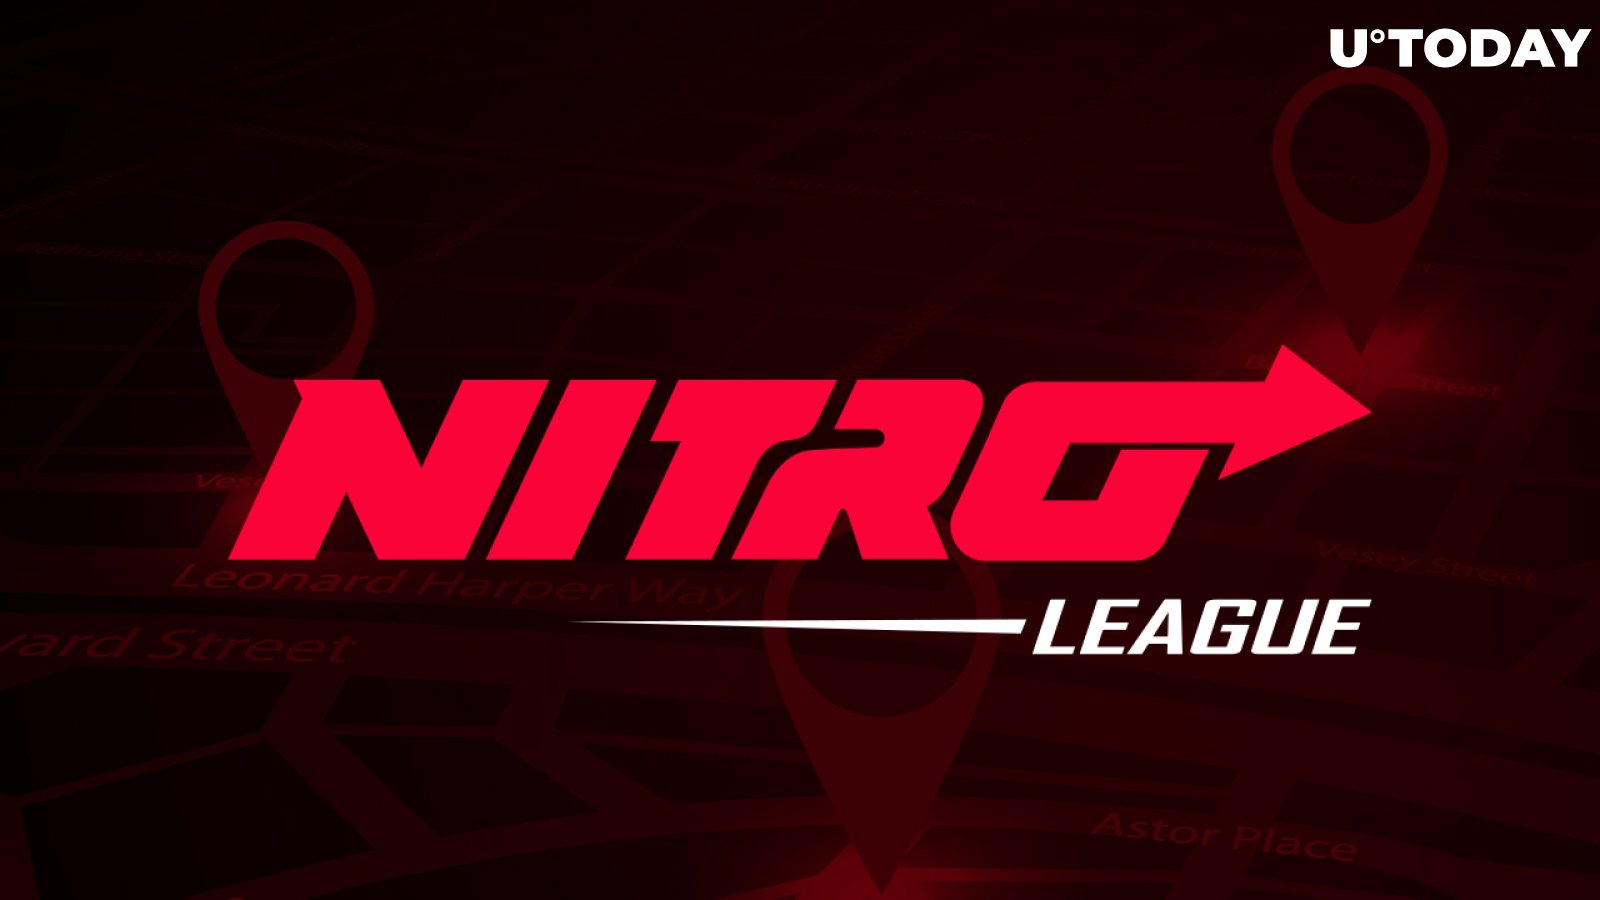 Nitro League Updates Roadmap for Its Racing Metaverse